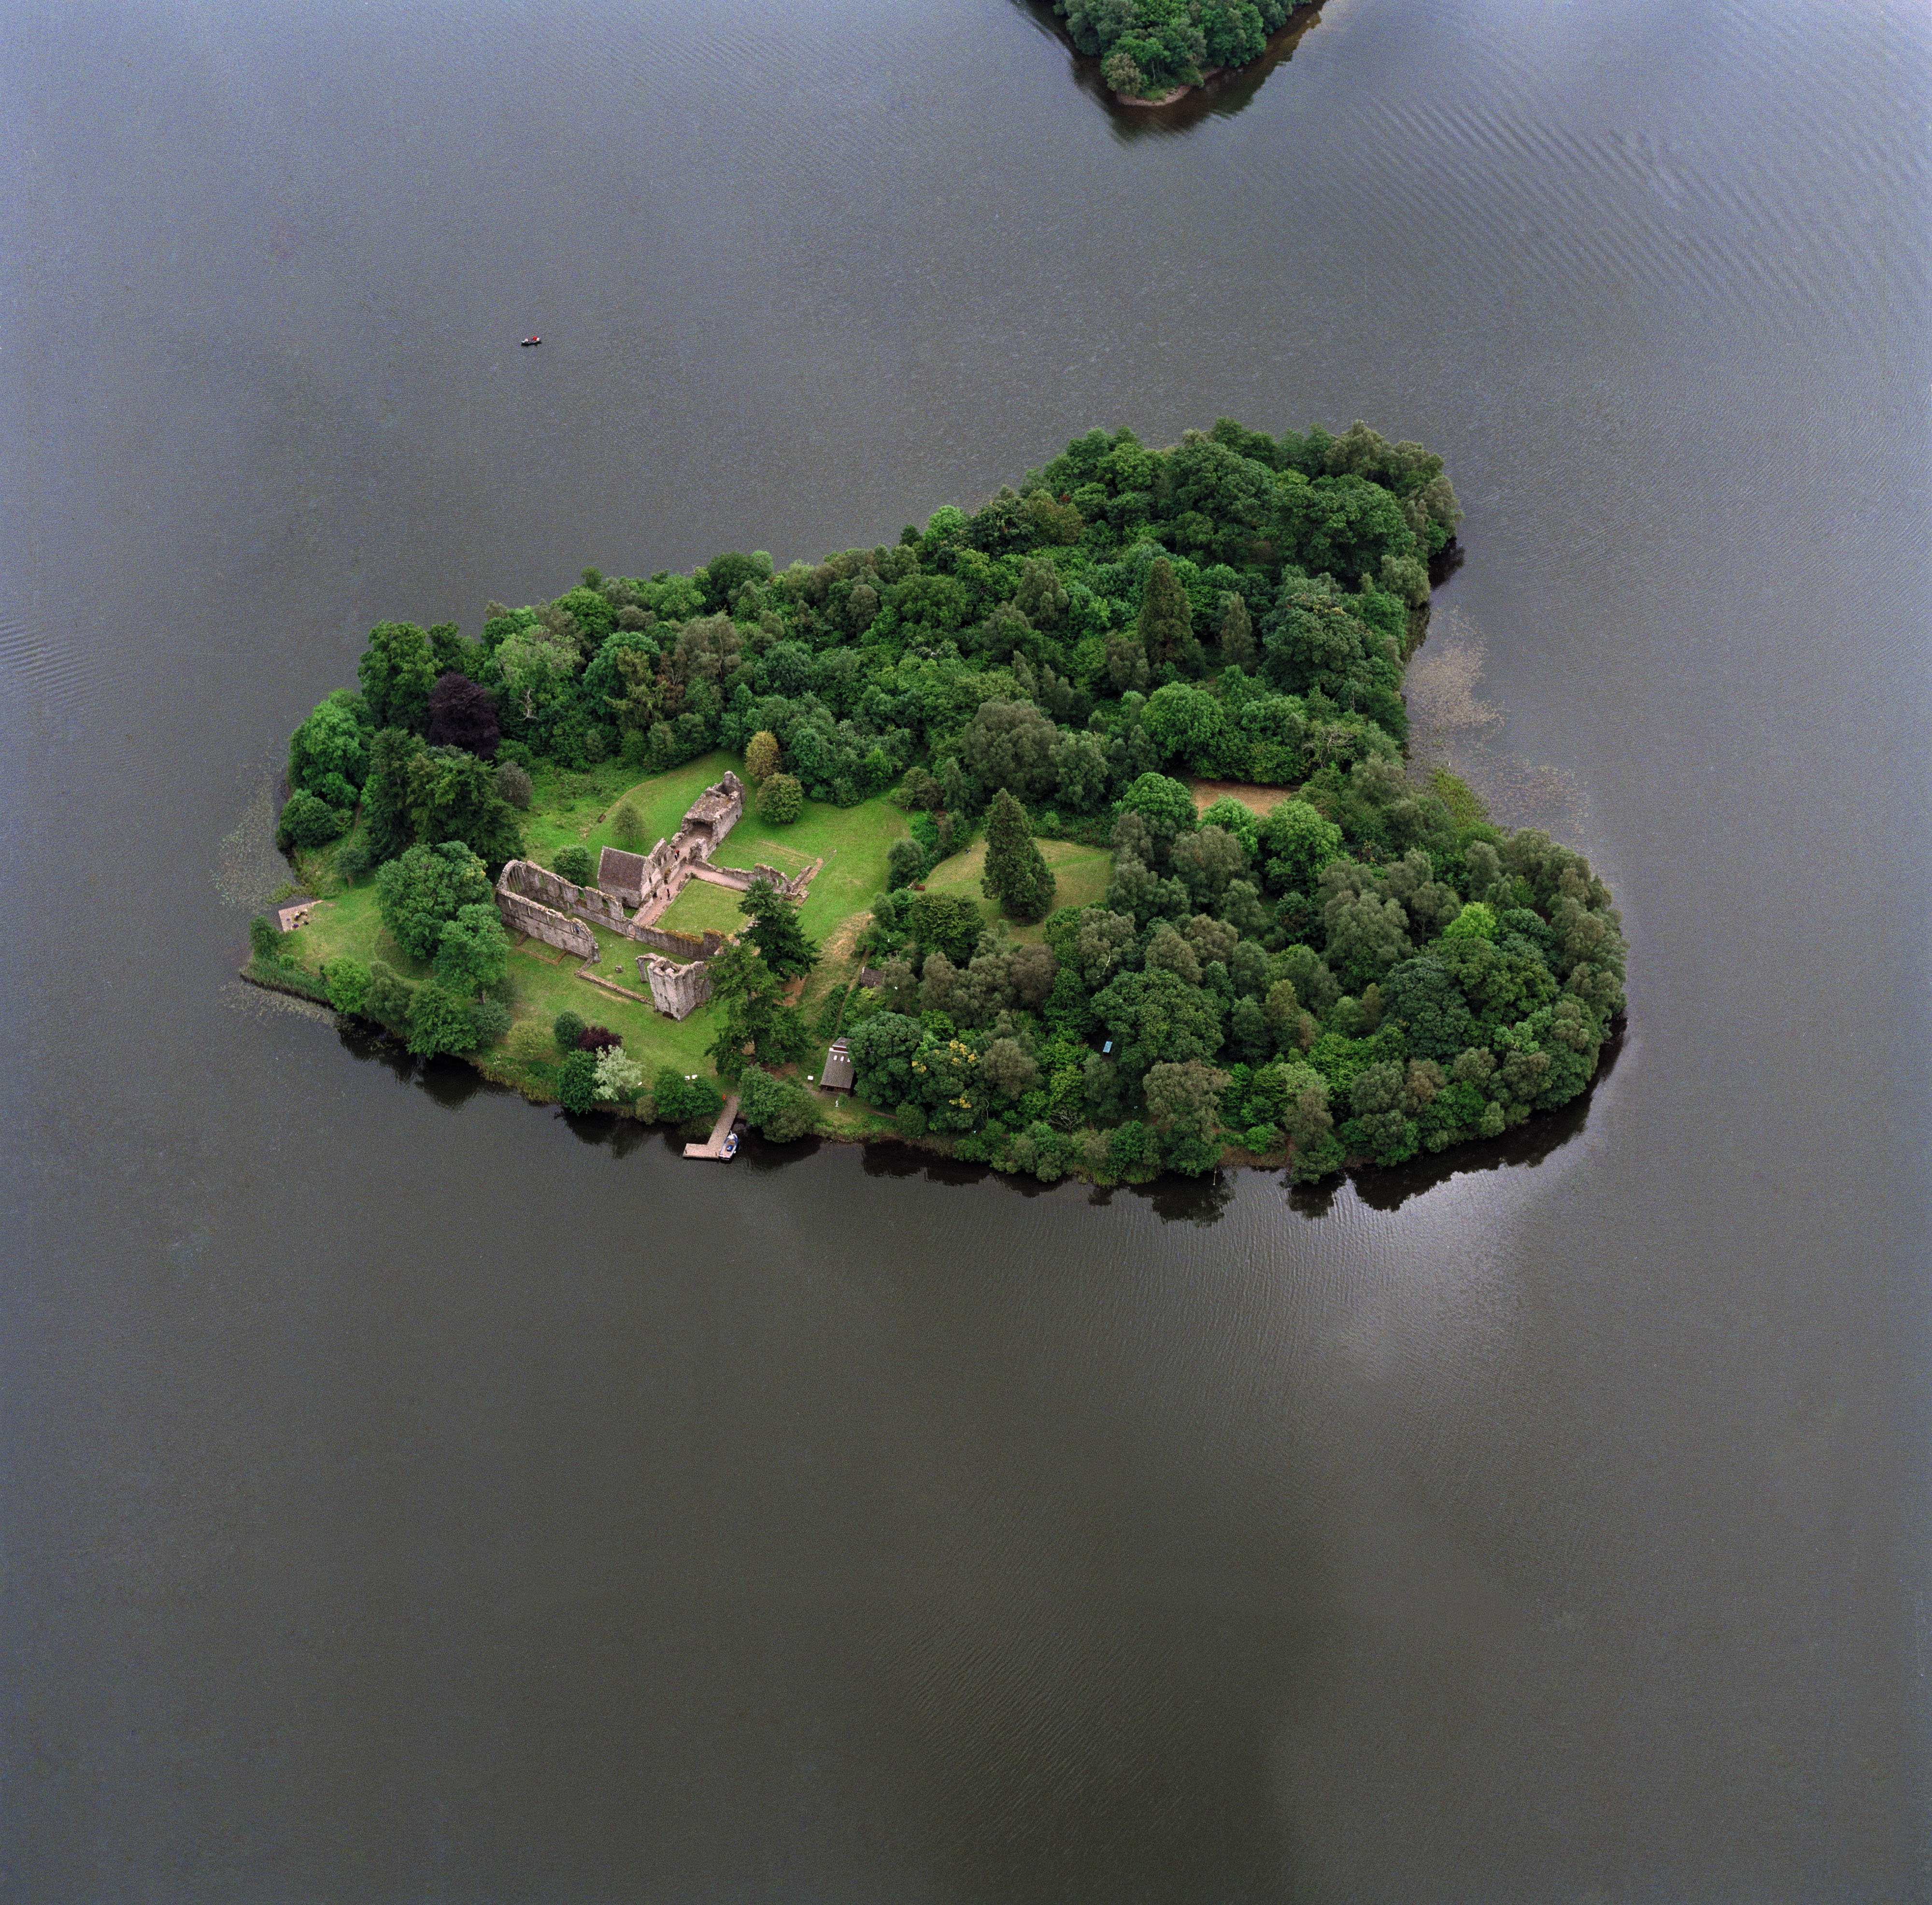 Inchmahome Priory on a heart shaped island